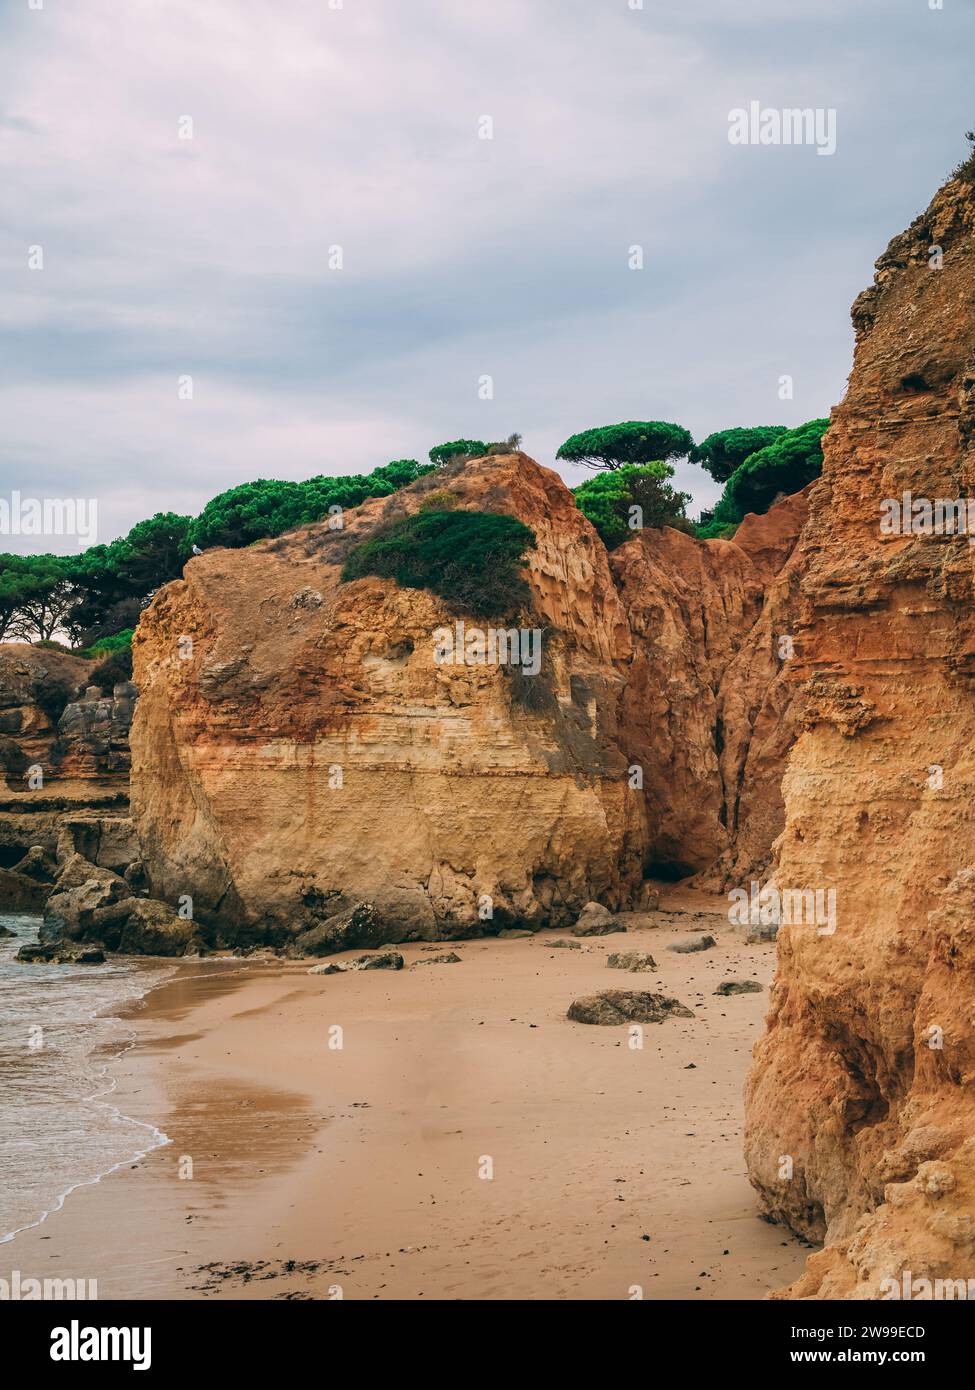 Olhos de agua beach in Albufeira. This beach is a part of famous tourist region Algarve. Stock Photo